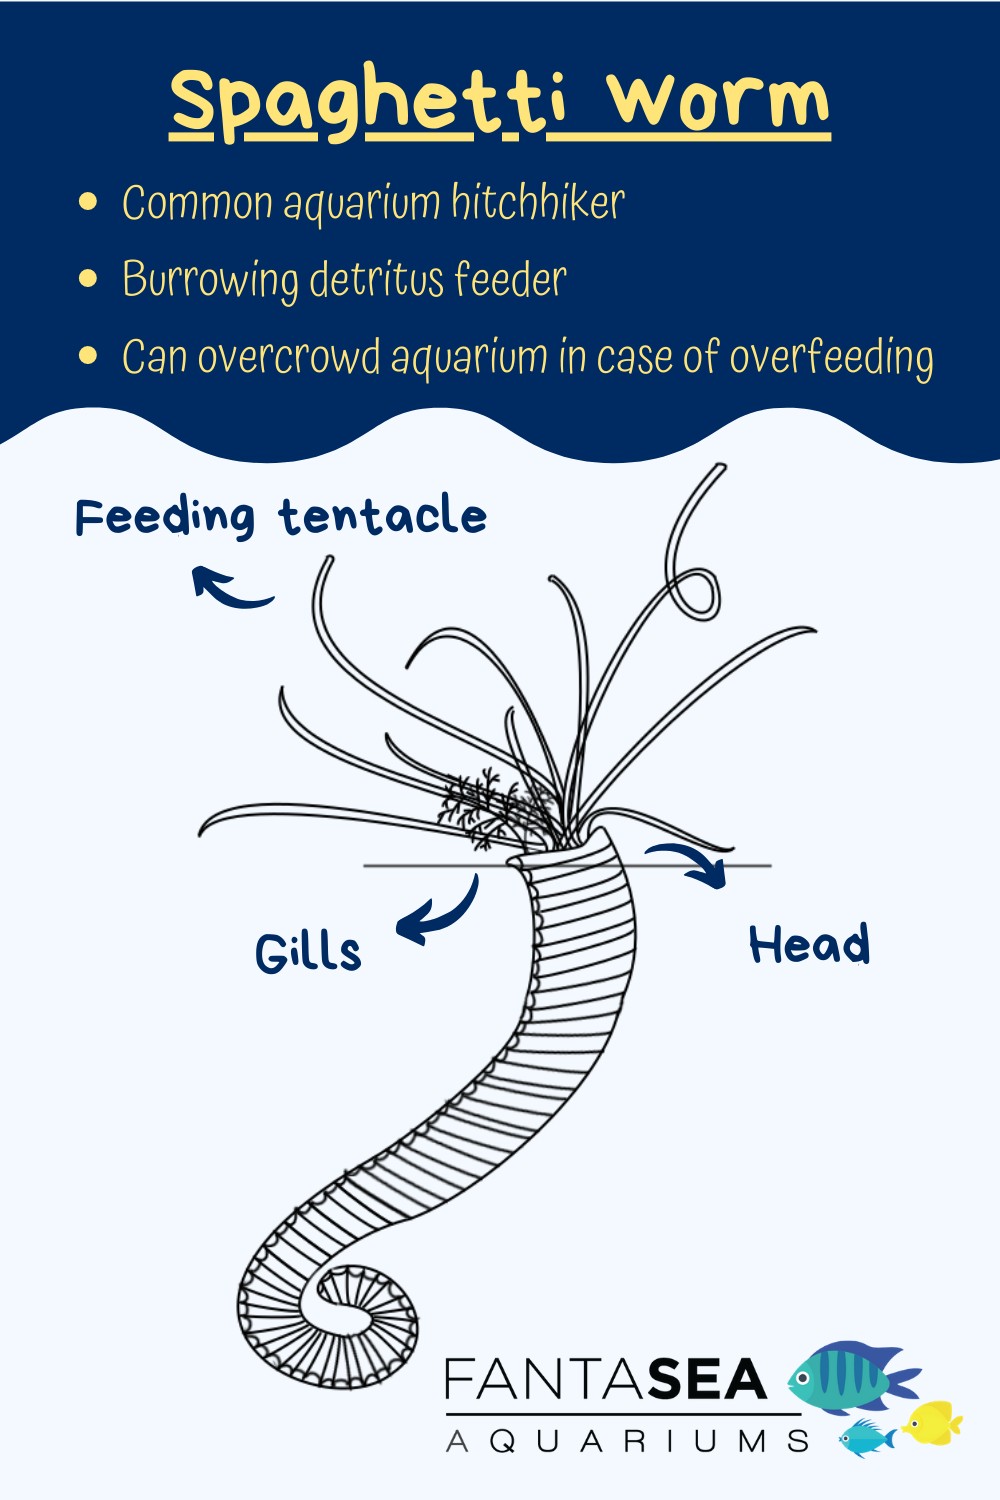 Spaghetti worm diagram and info